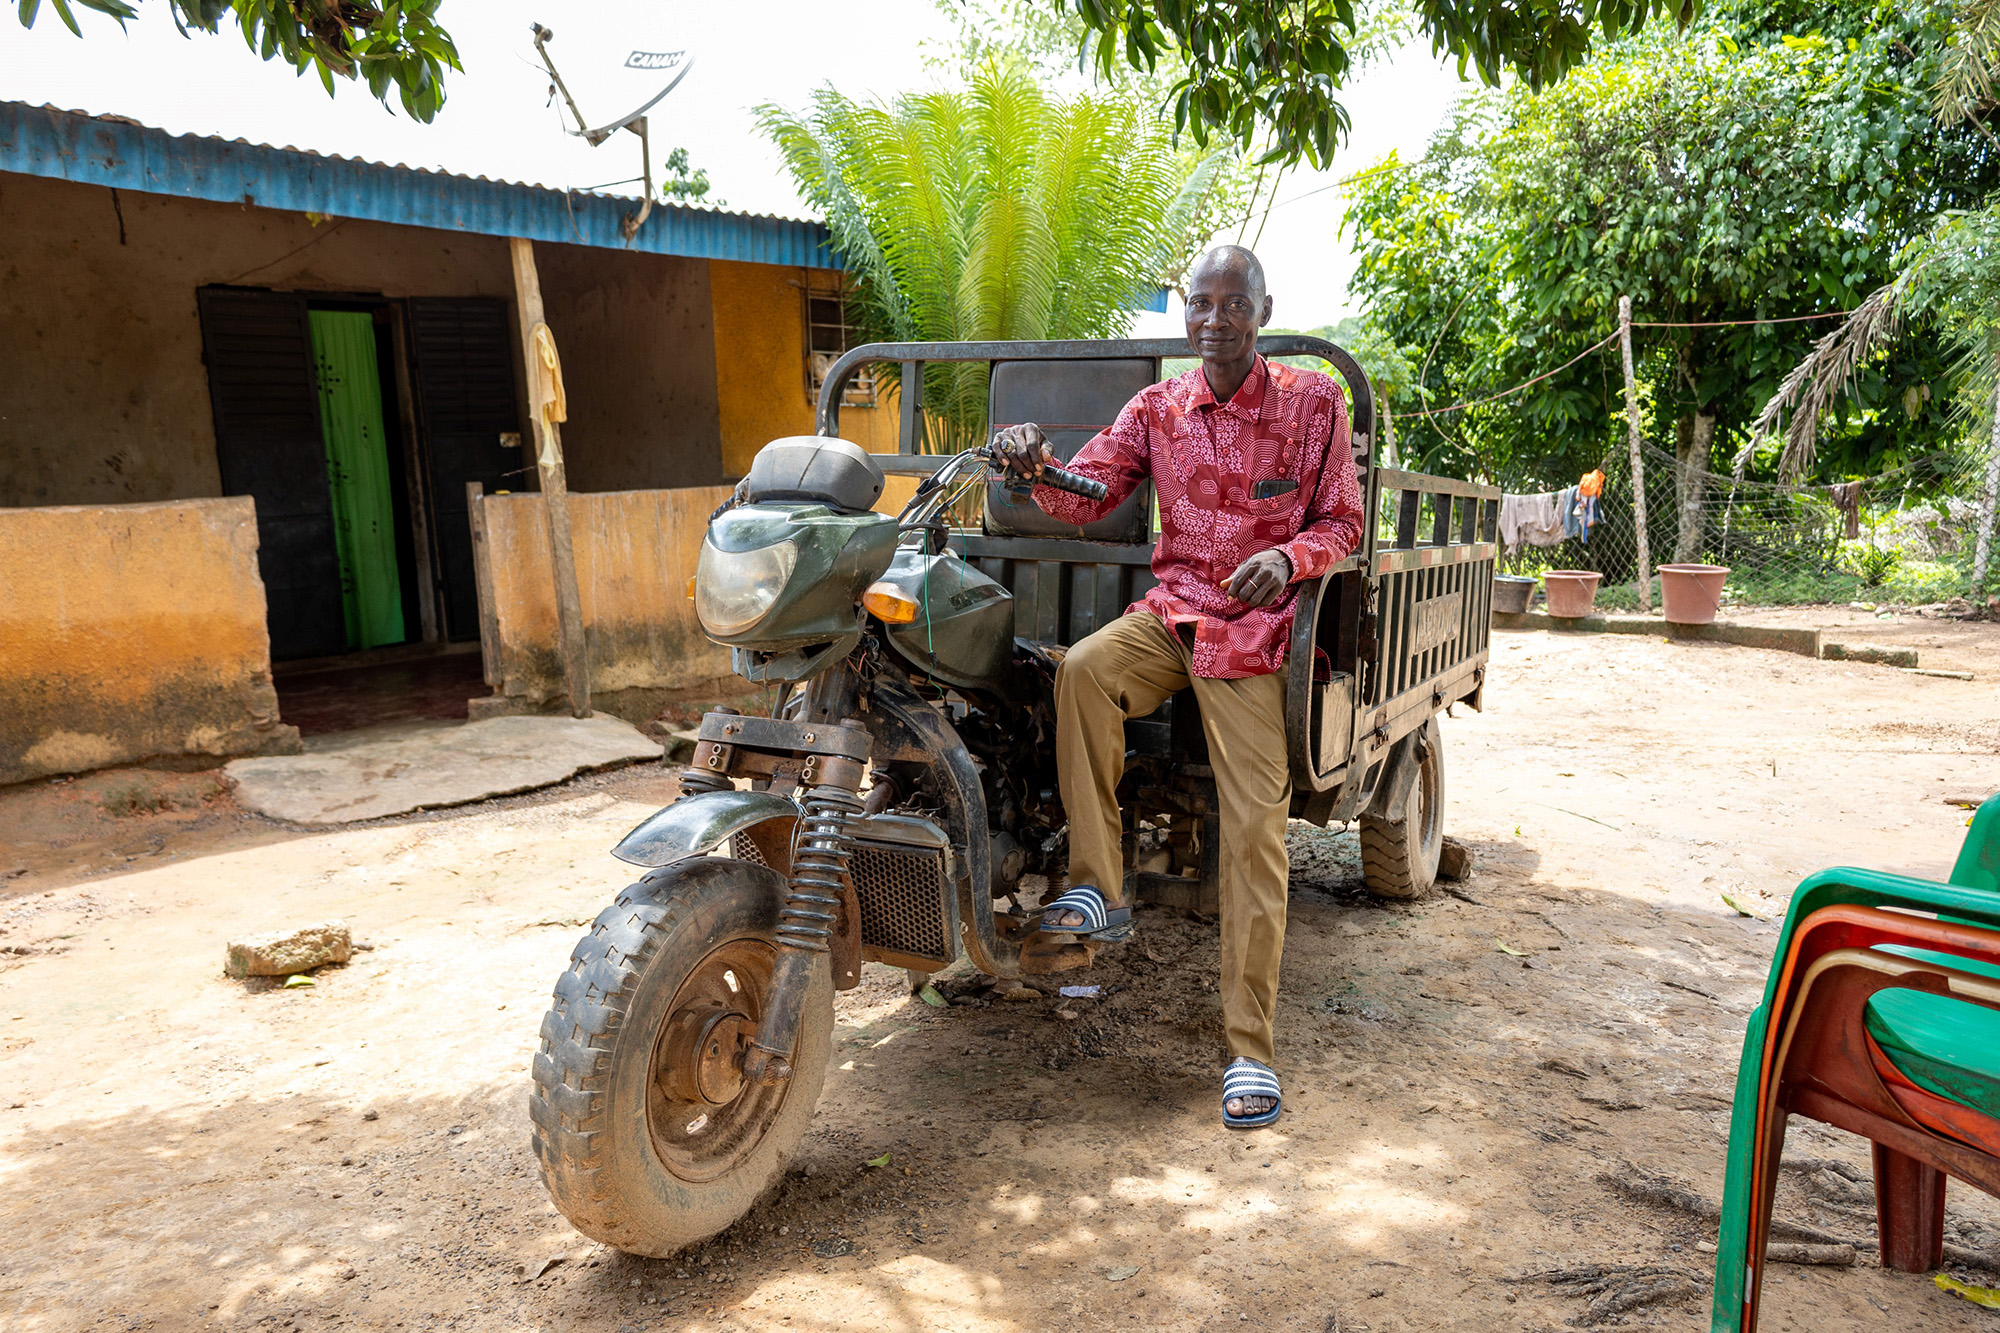 Yabao Oumarou sitting on a motorcycle cart.